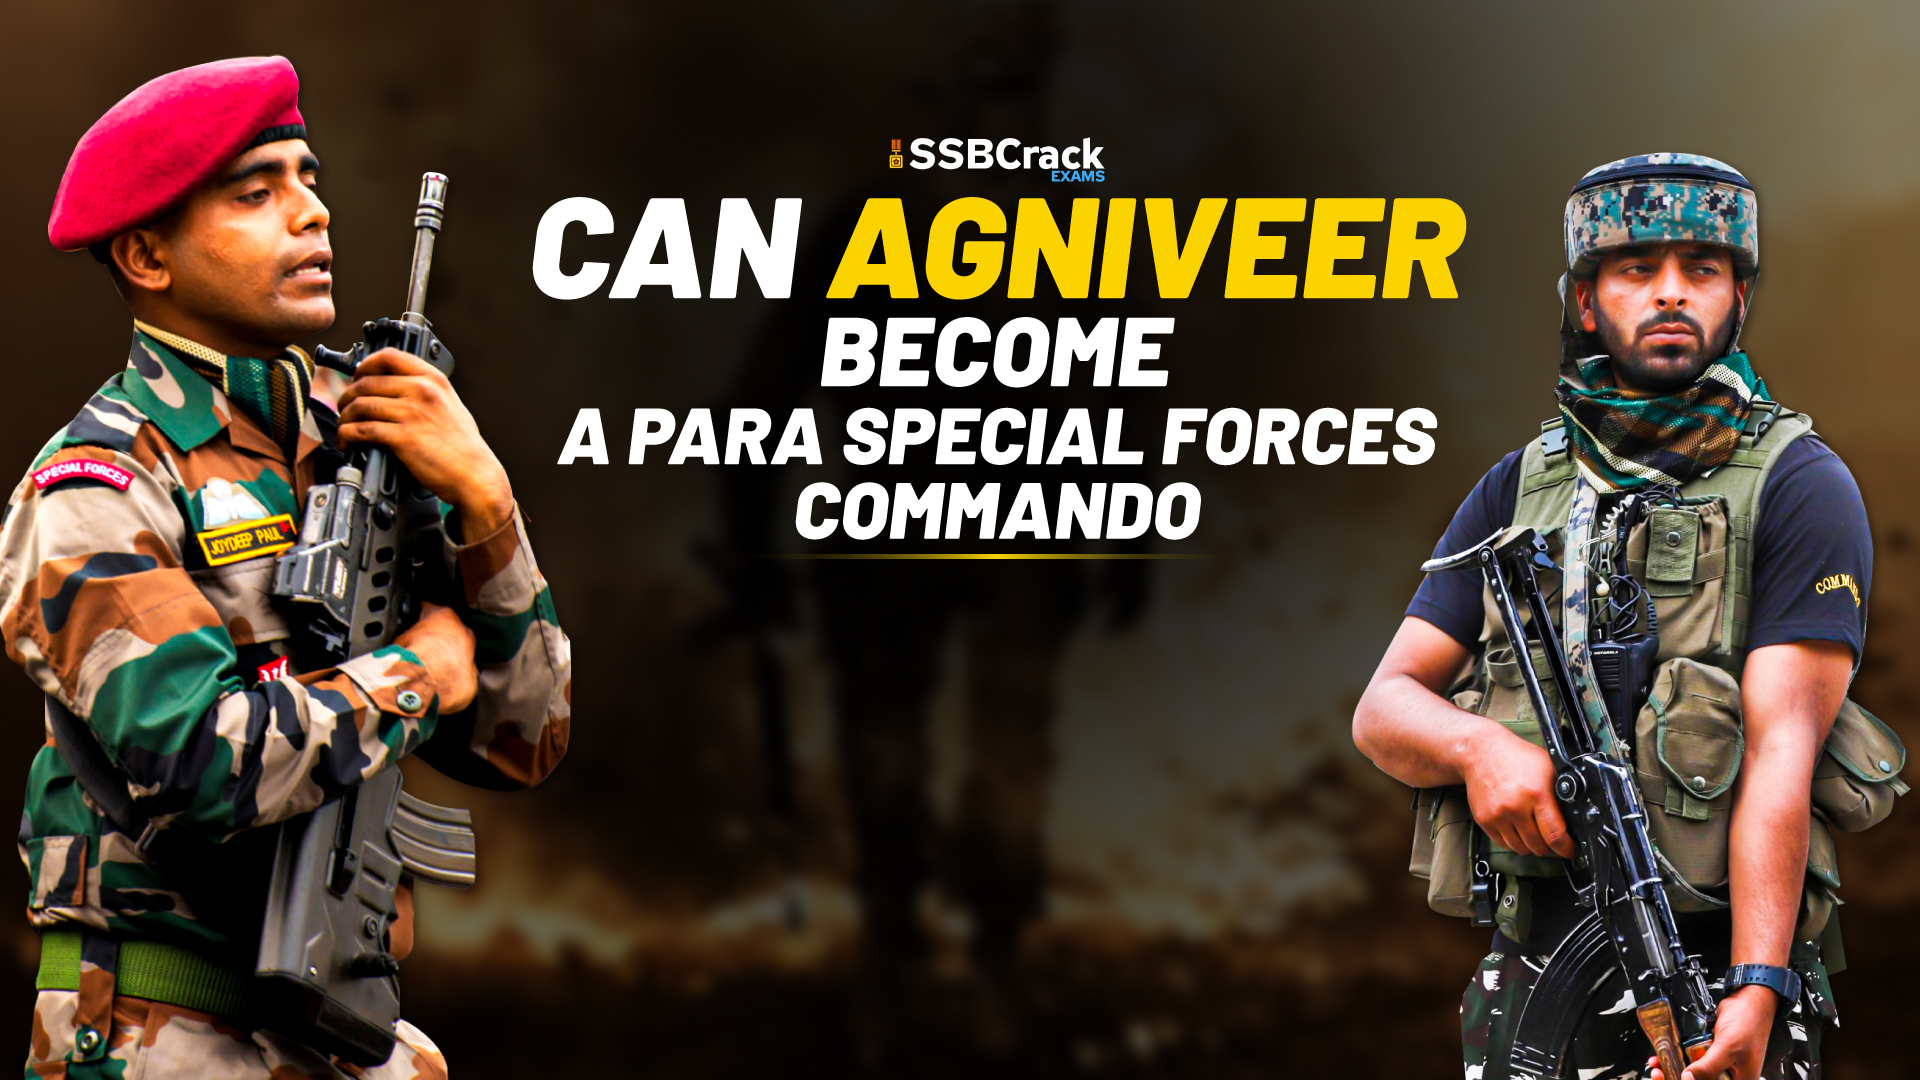 Can Agniveer Become a PARA Special Forces Commando Through Agnipath Entry